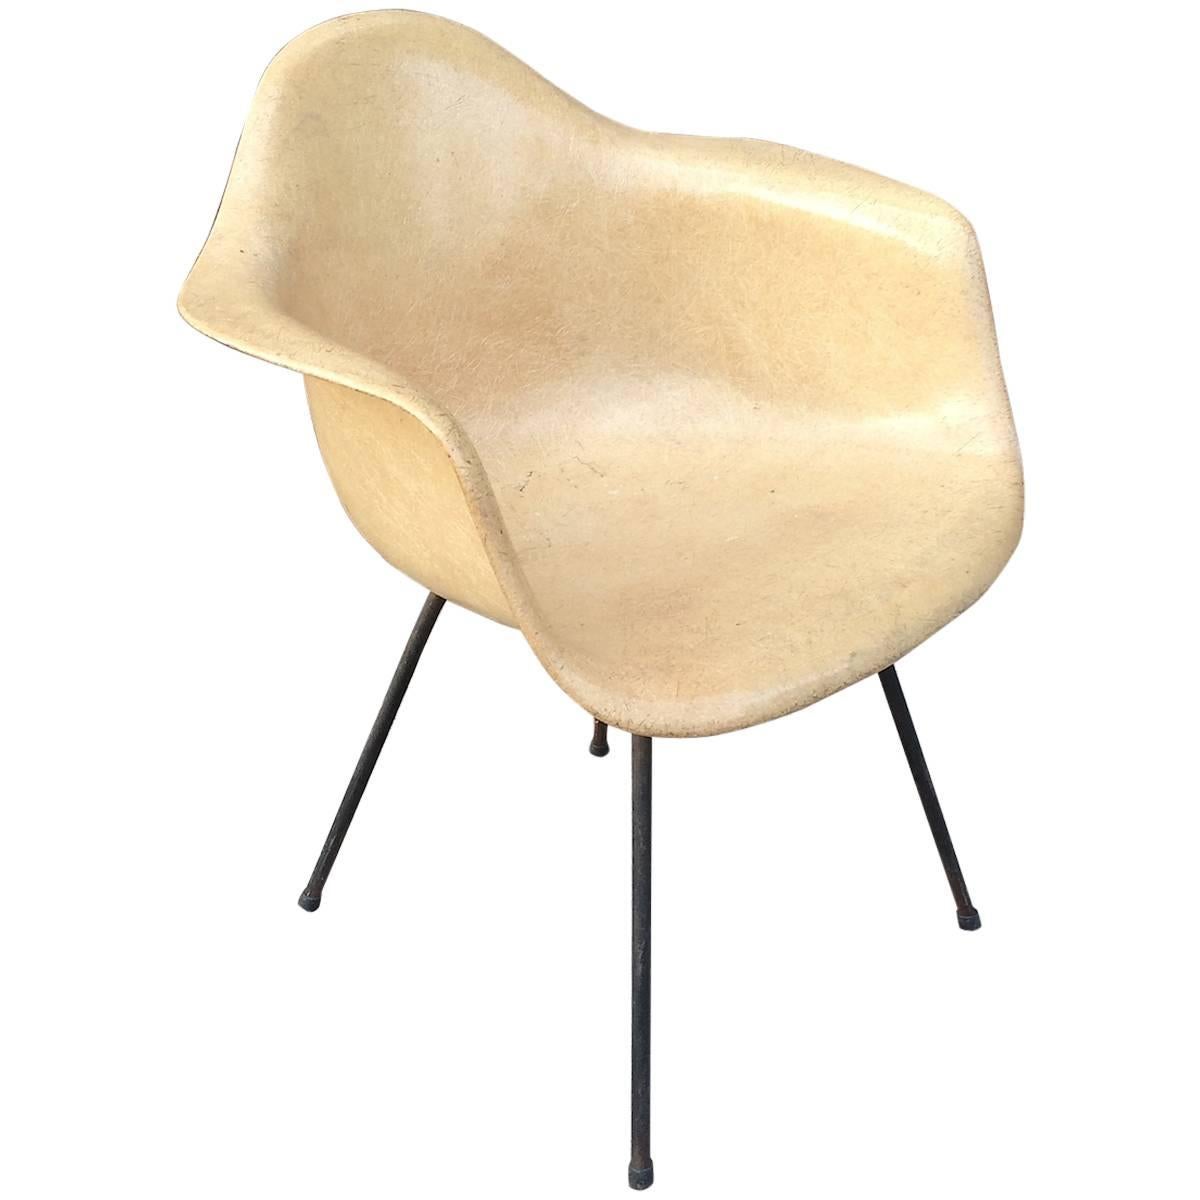 Fiberglass Armchair by Eames for Herman Miller